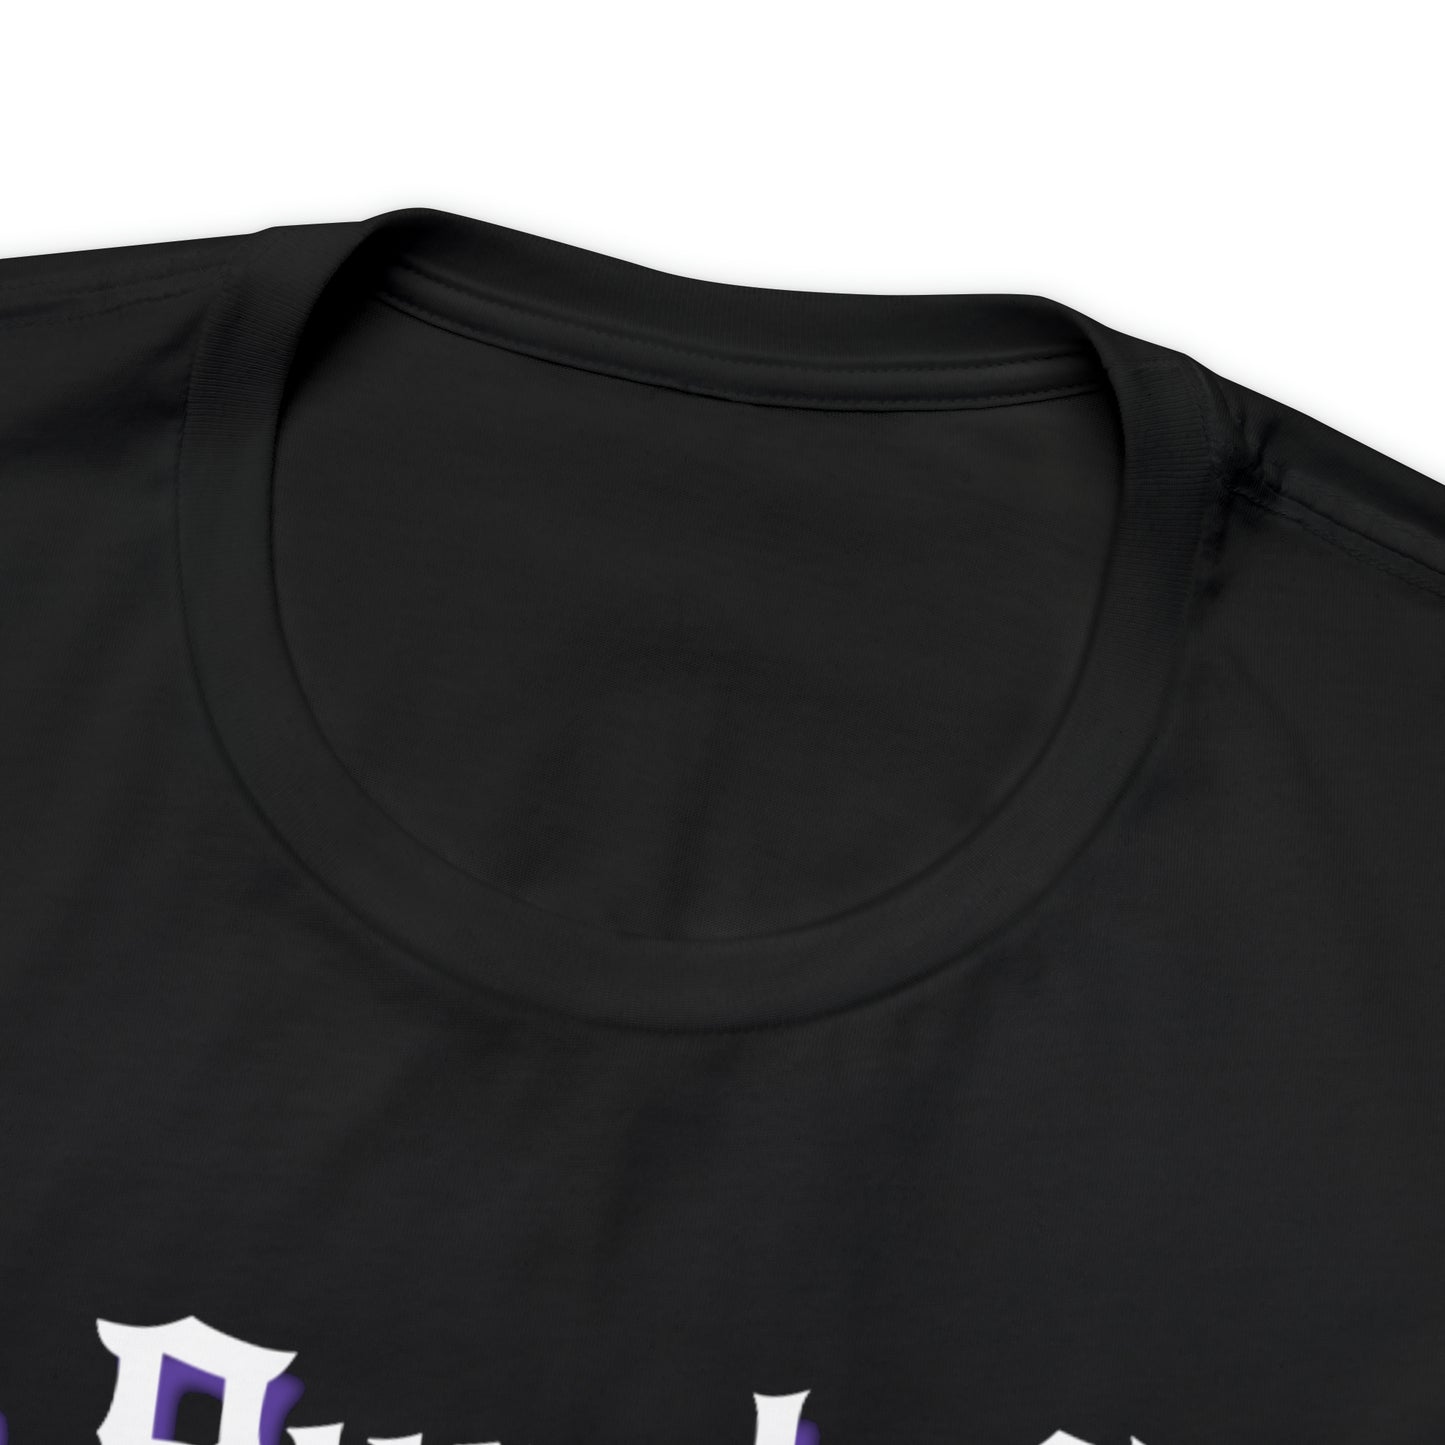 Das Purple Fang Unisex T-Shirt